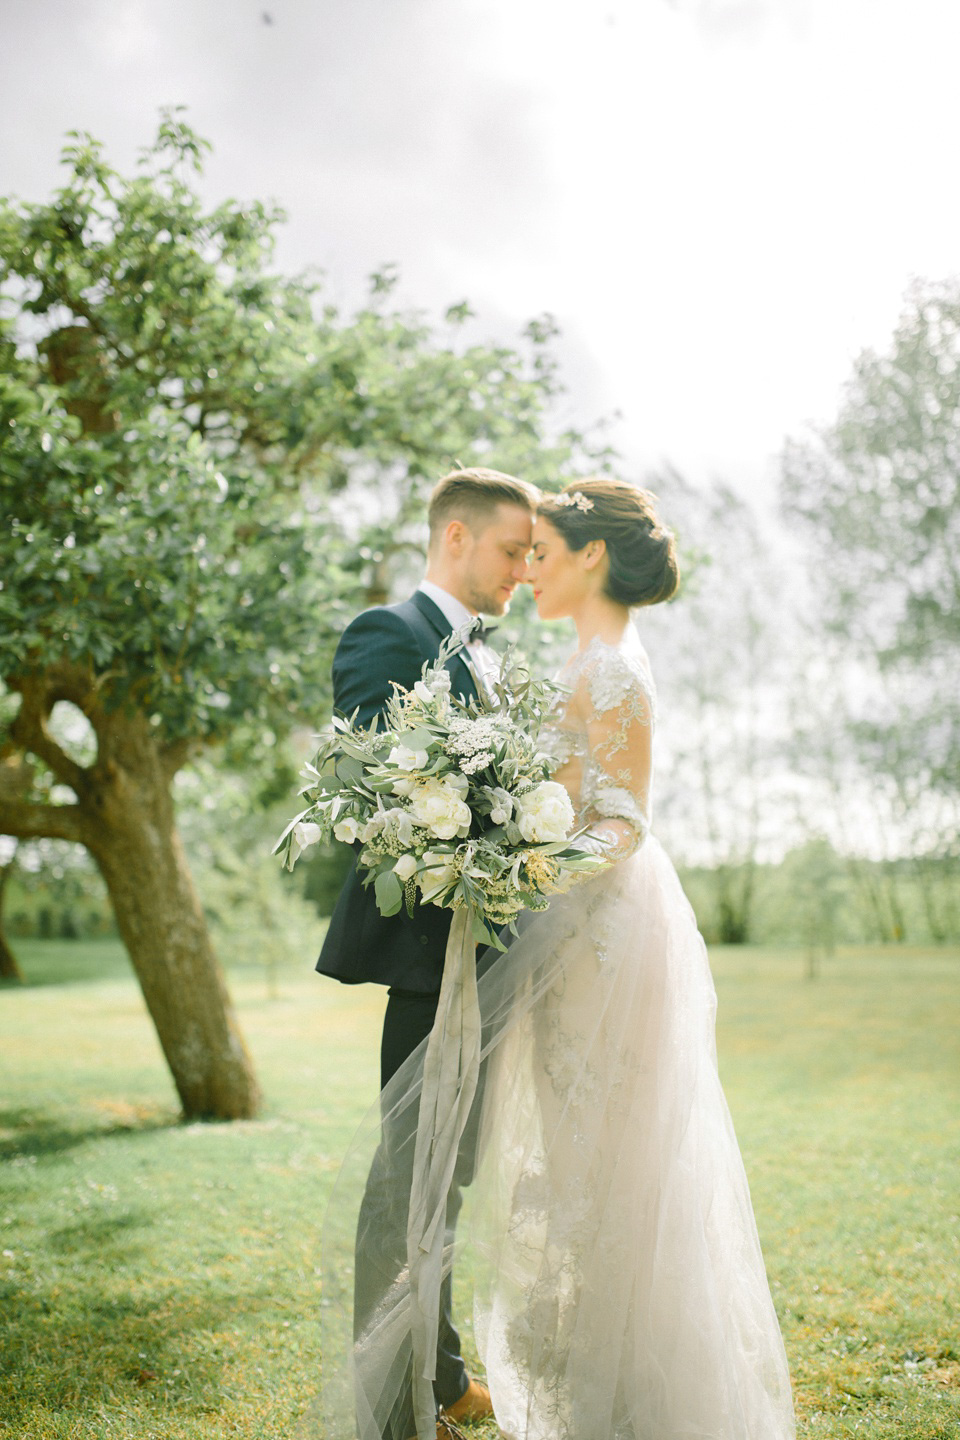 Fine art weddings inspiration - photography by Suzanne Li